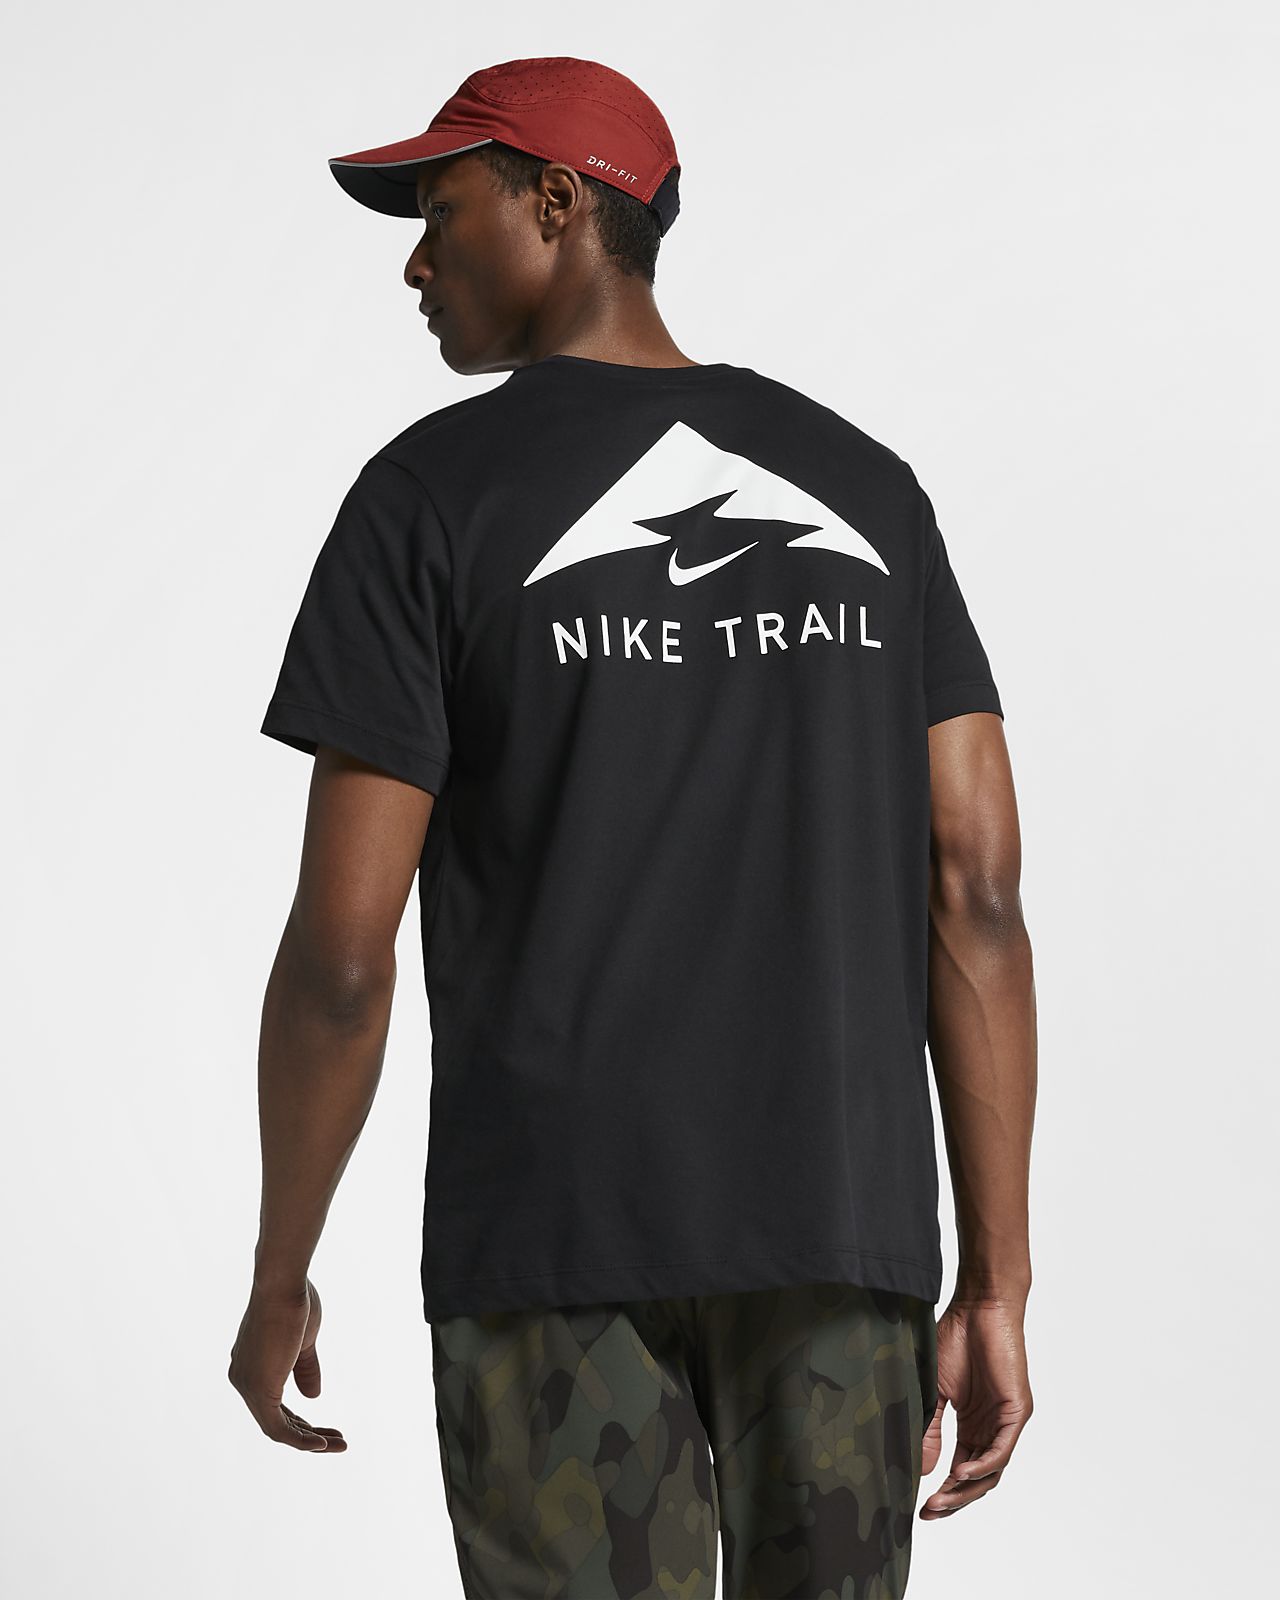 nike trail sweatshirt